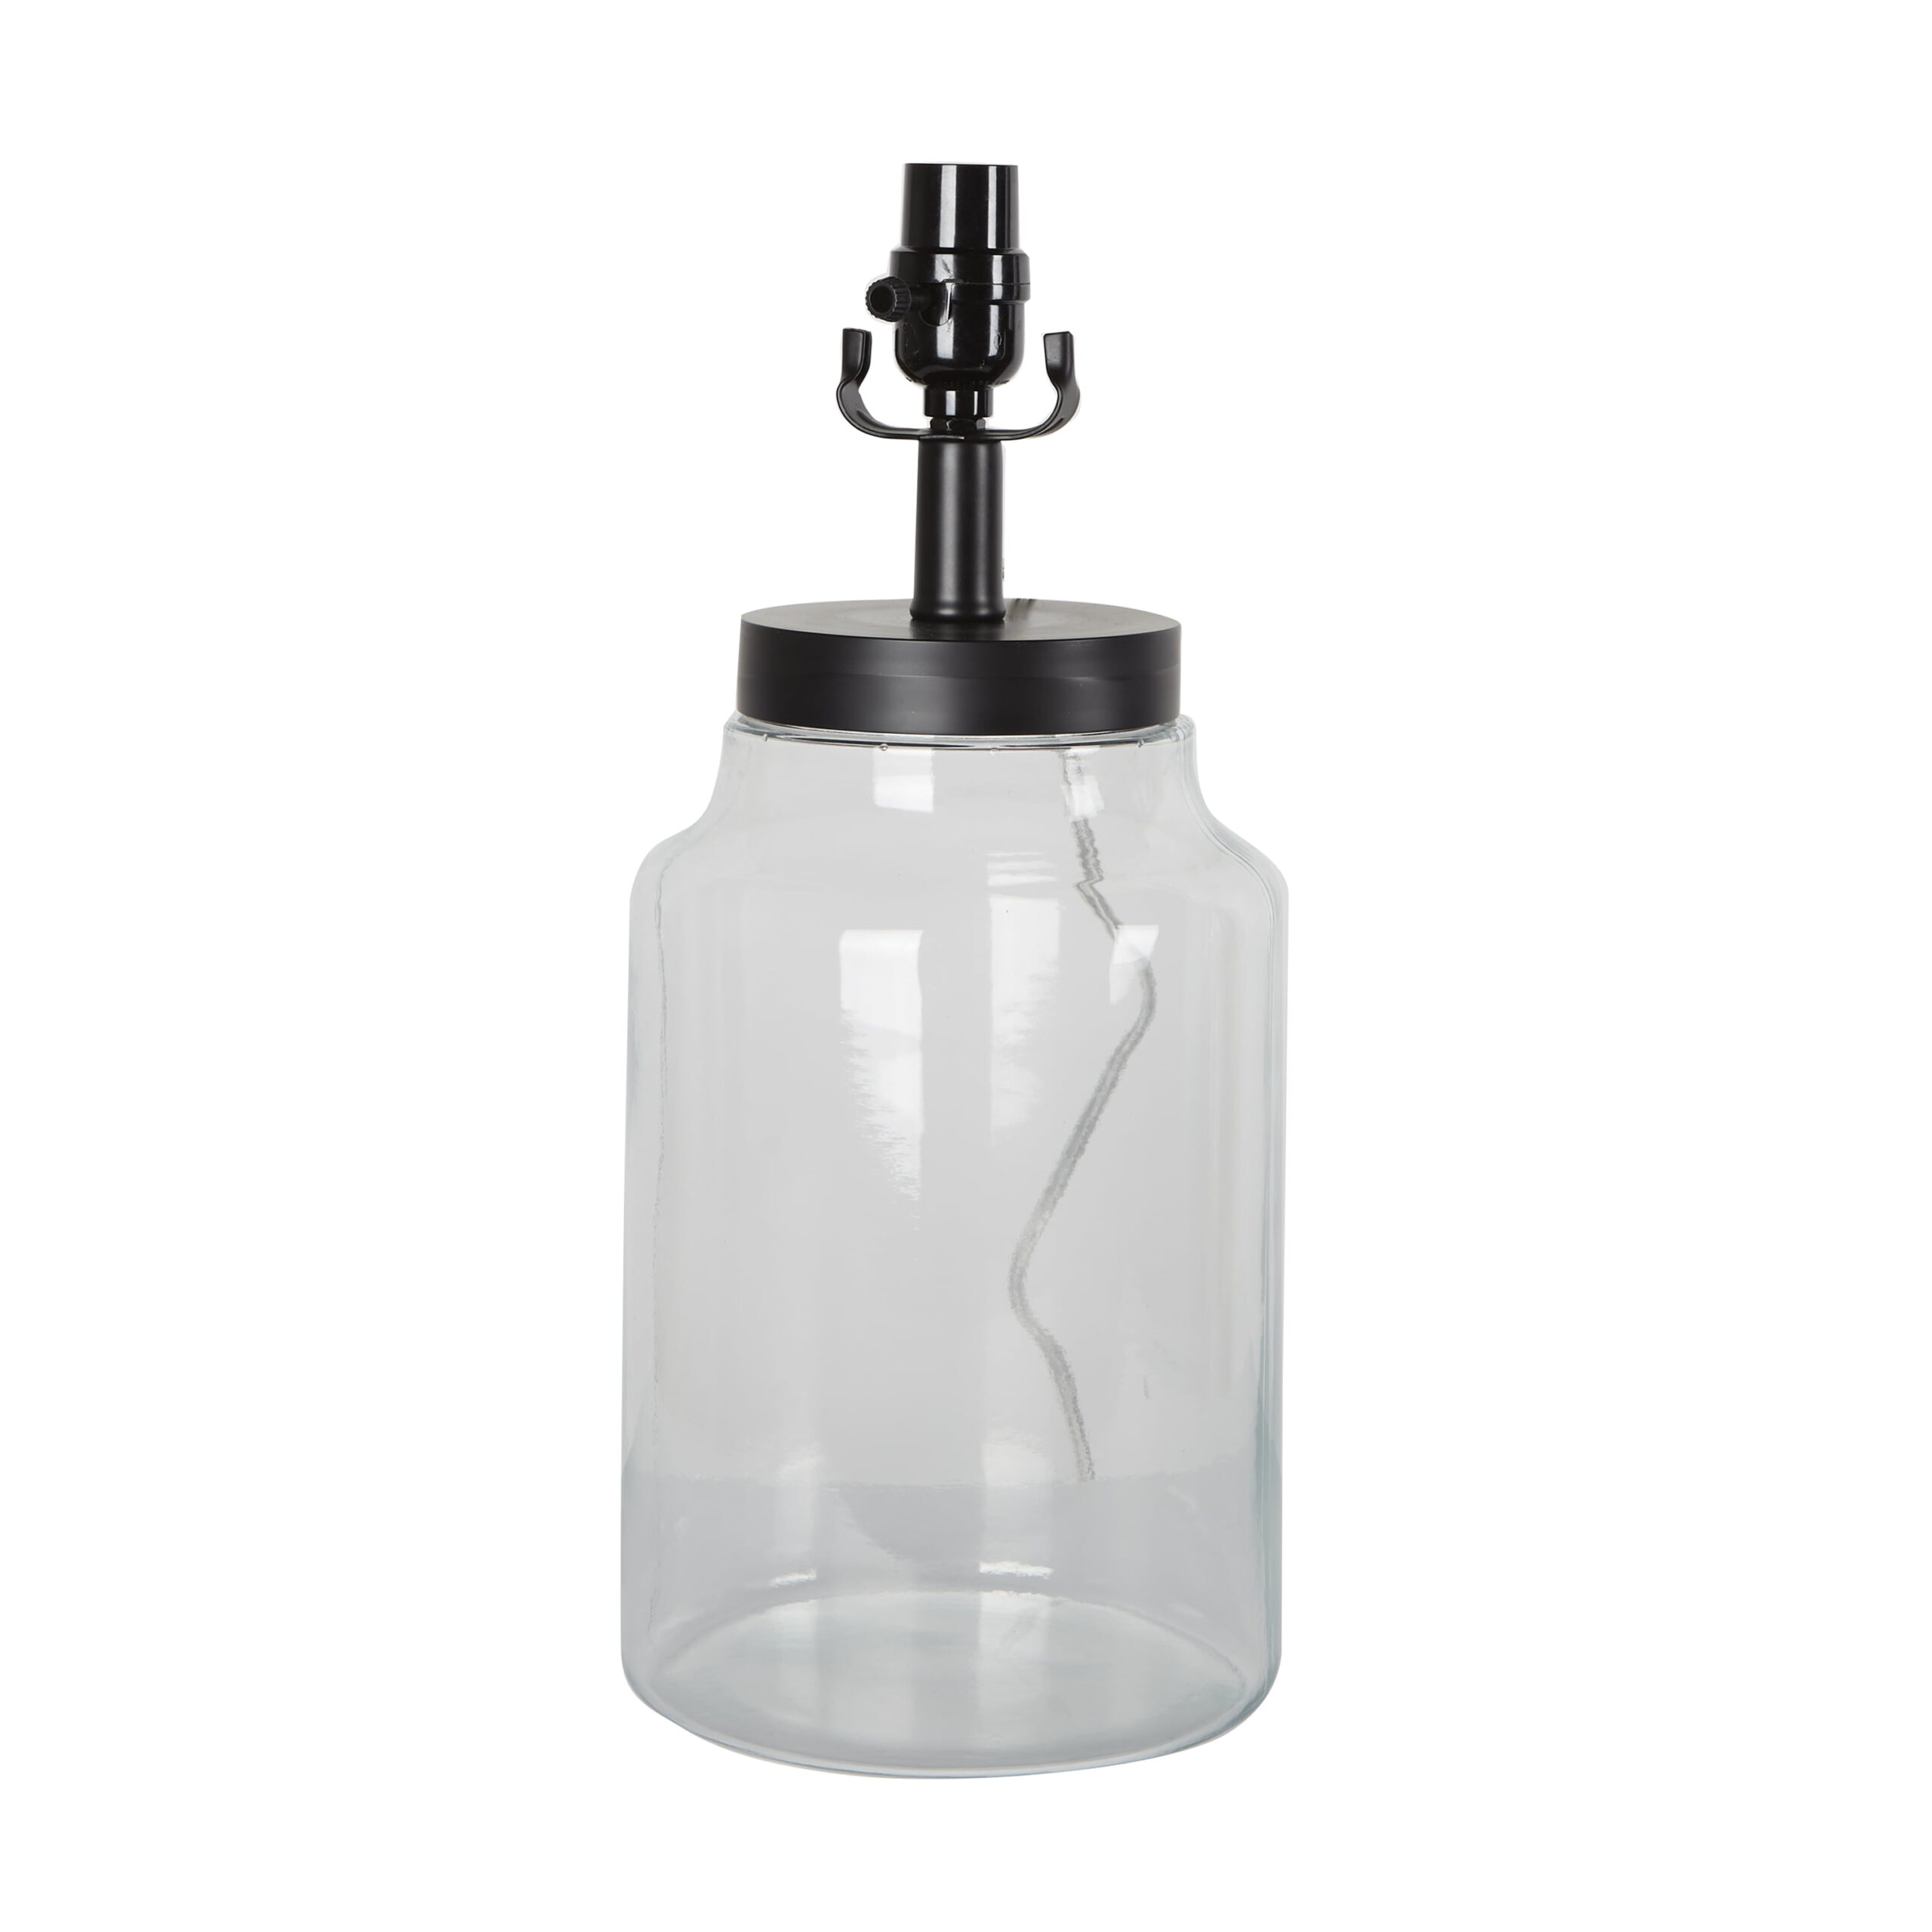 Mainstays Fillable Glass Jar Table Lamp Base， Black